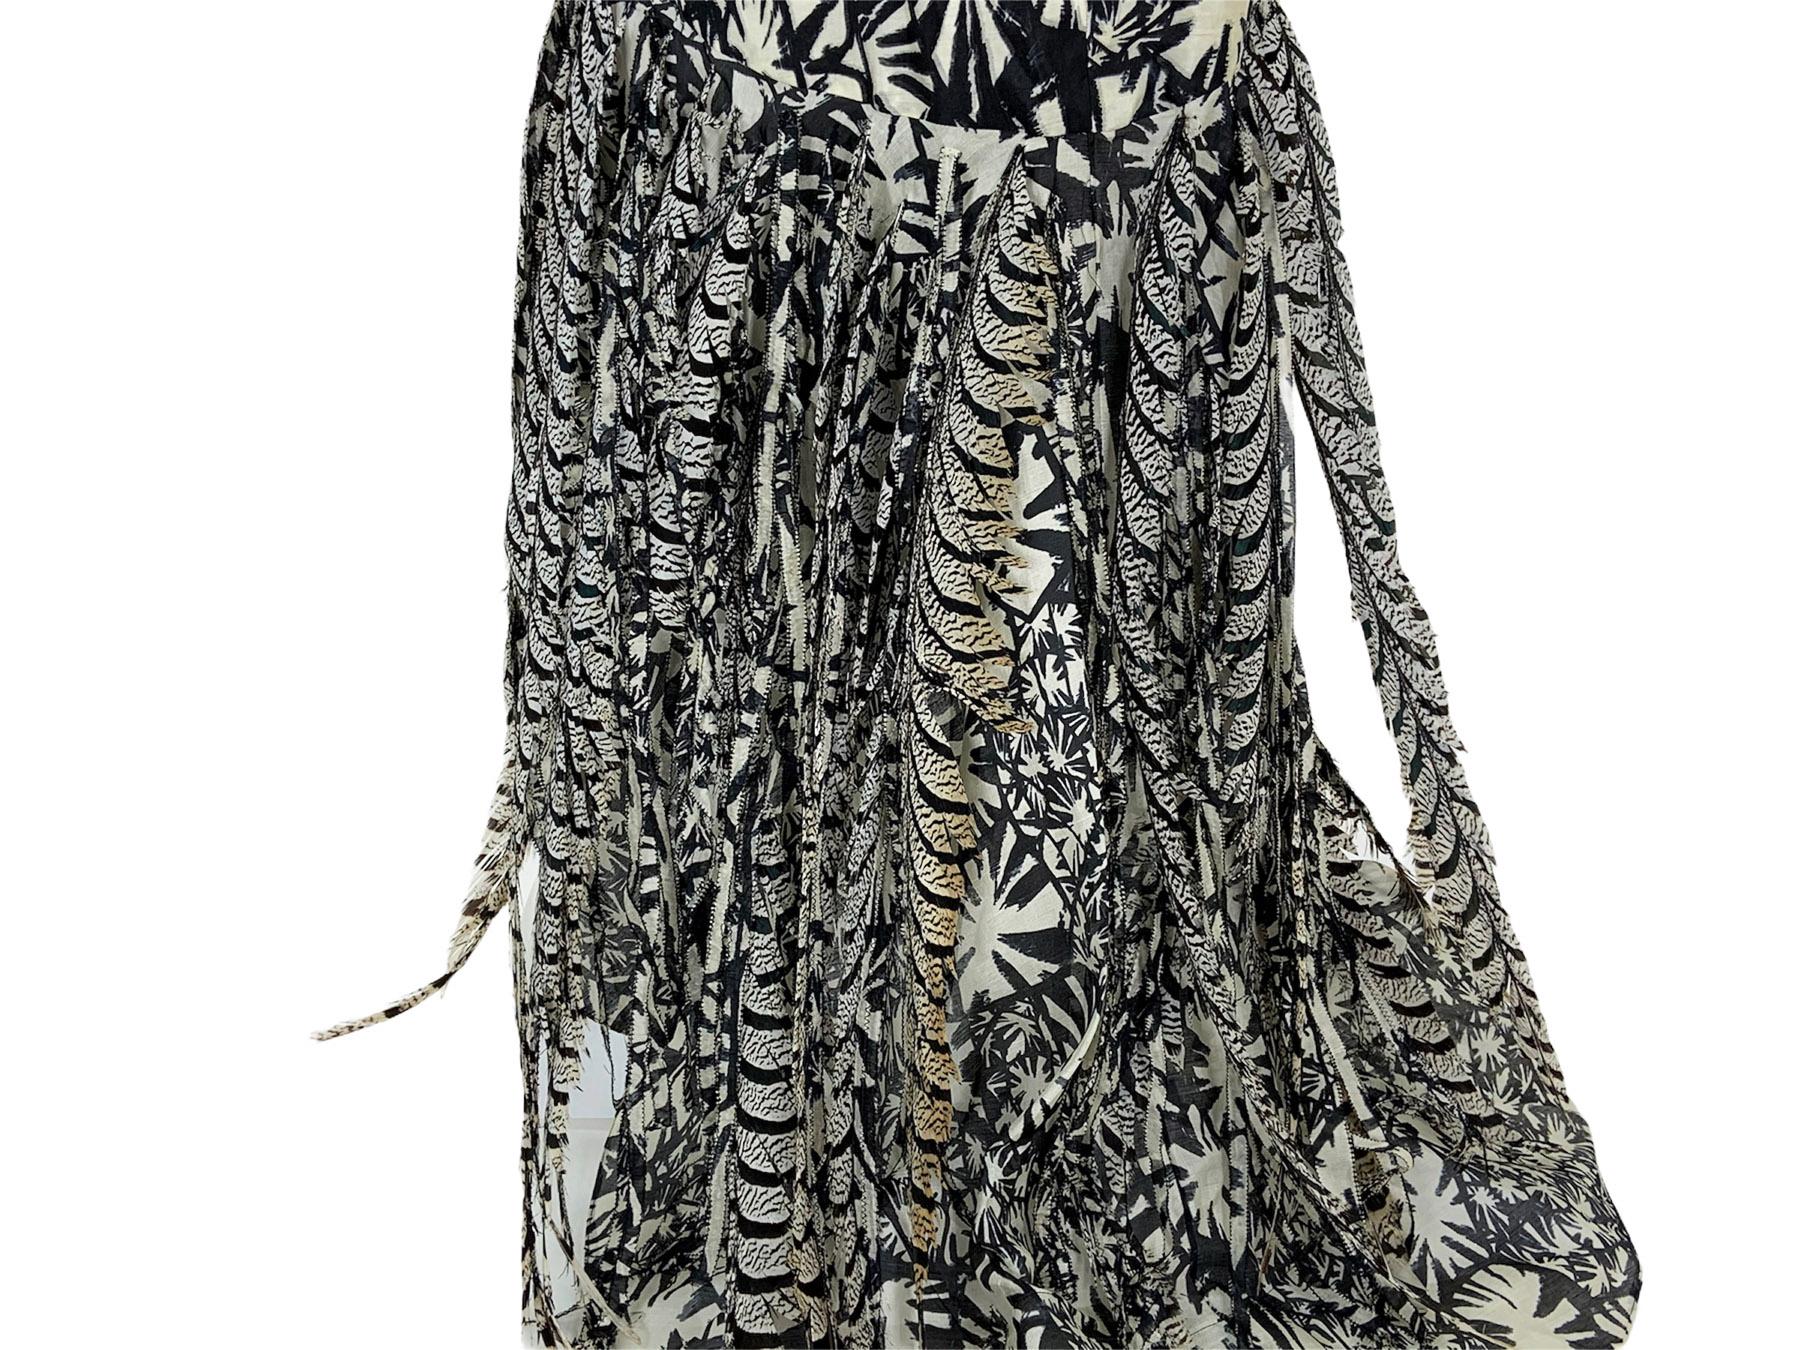 New Oscar de la Renta S/S 2008 AD Campaign Silk Pheasant Feather Dress Gown US 8 3